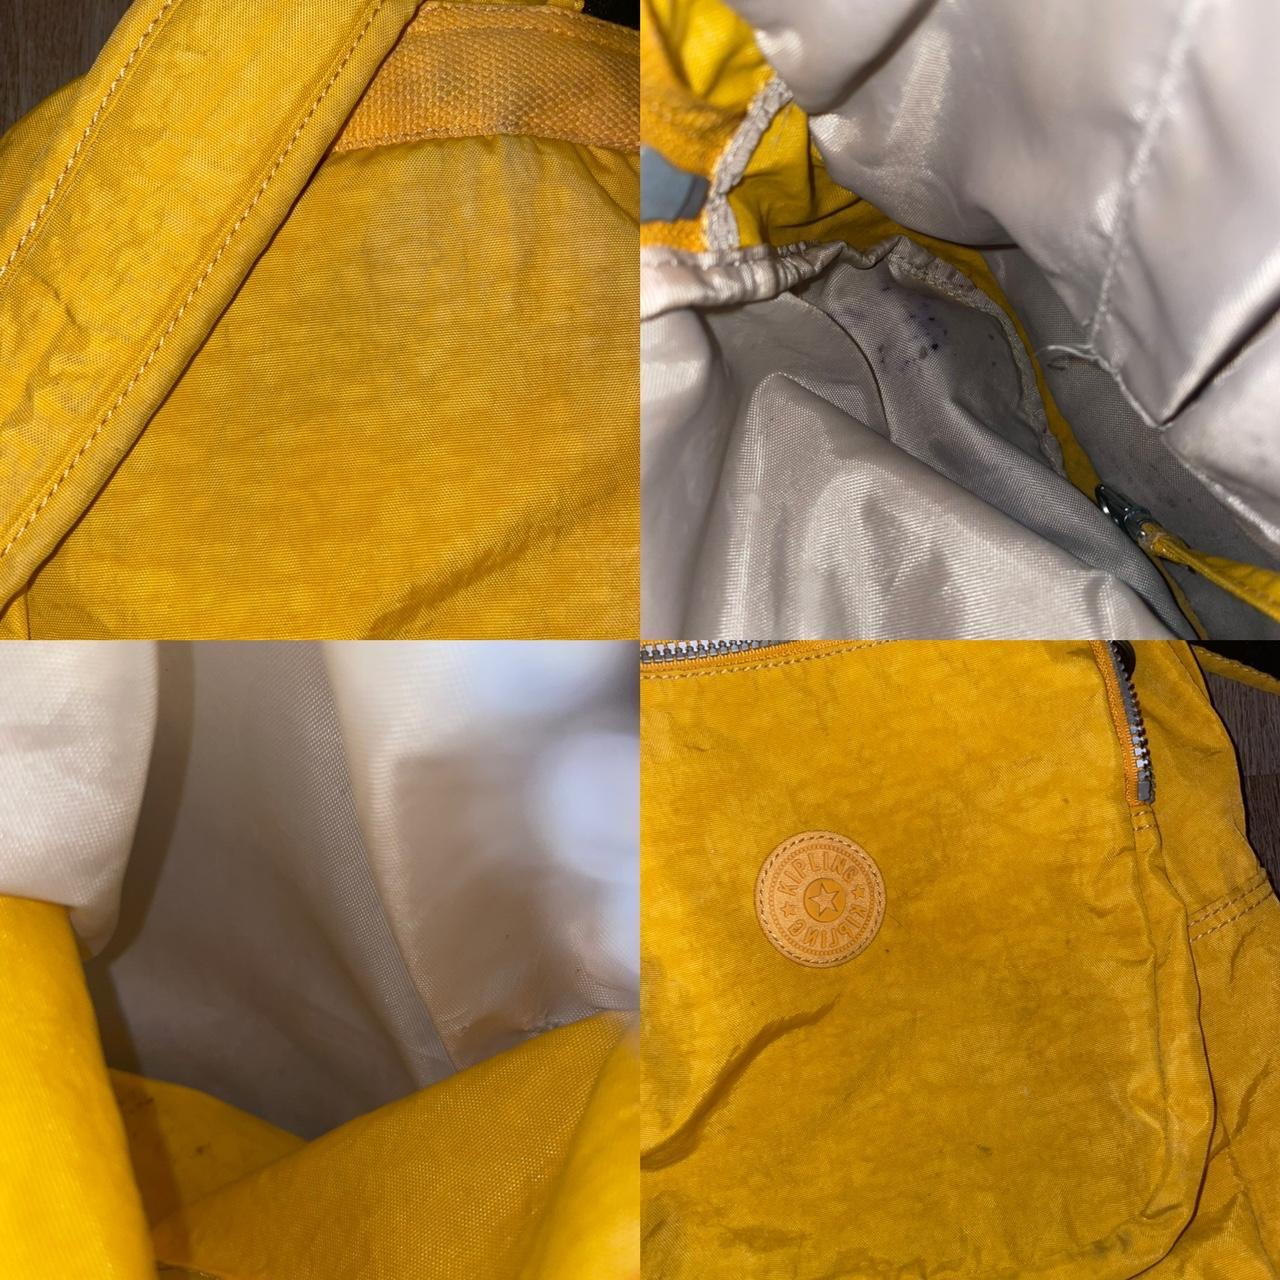 Product Image 3 - Kipling Bookbag 
Gold/mustard color 
In